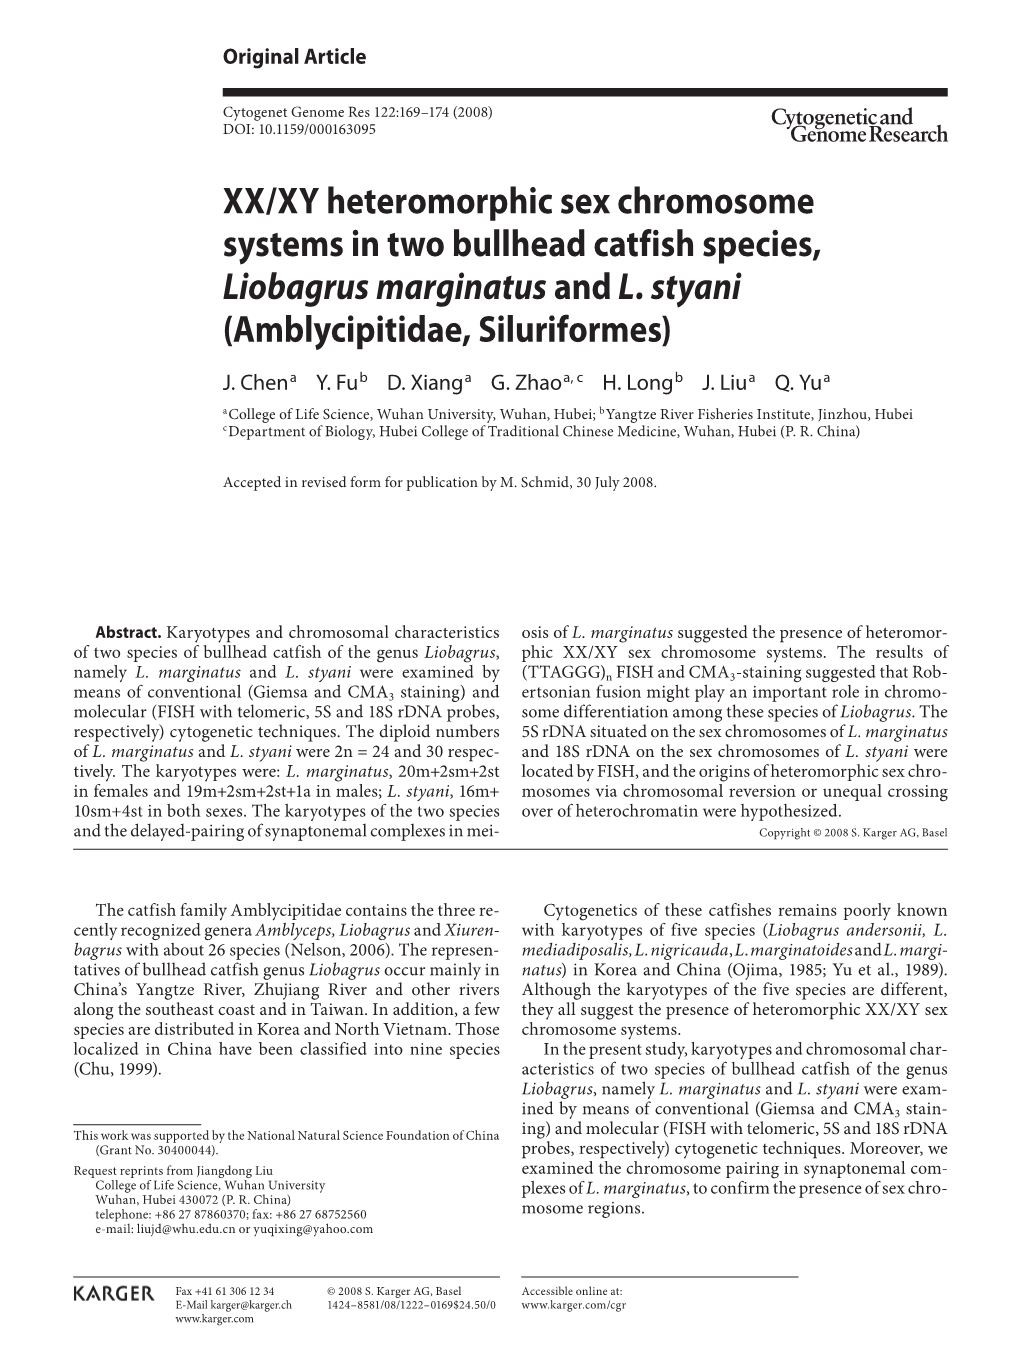 XX/XY Heteromorphic Sex Chromosome Systems in Two Bullhead Catfish Species, Liobagrusmarginatus and L. Styani